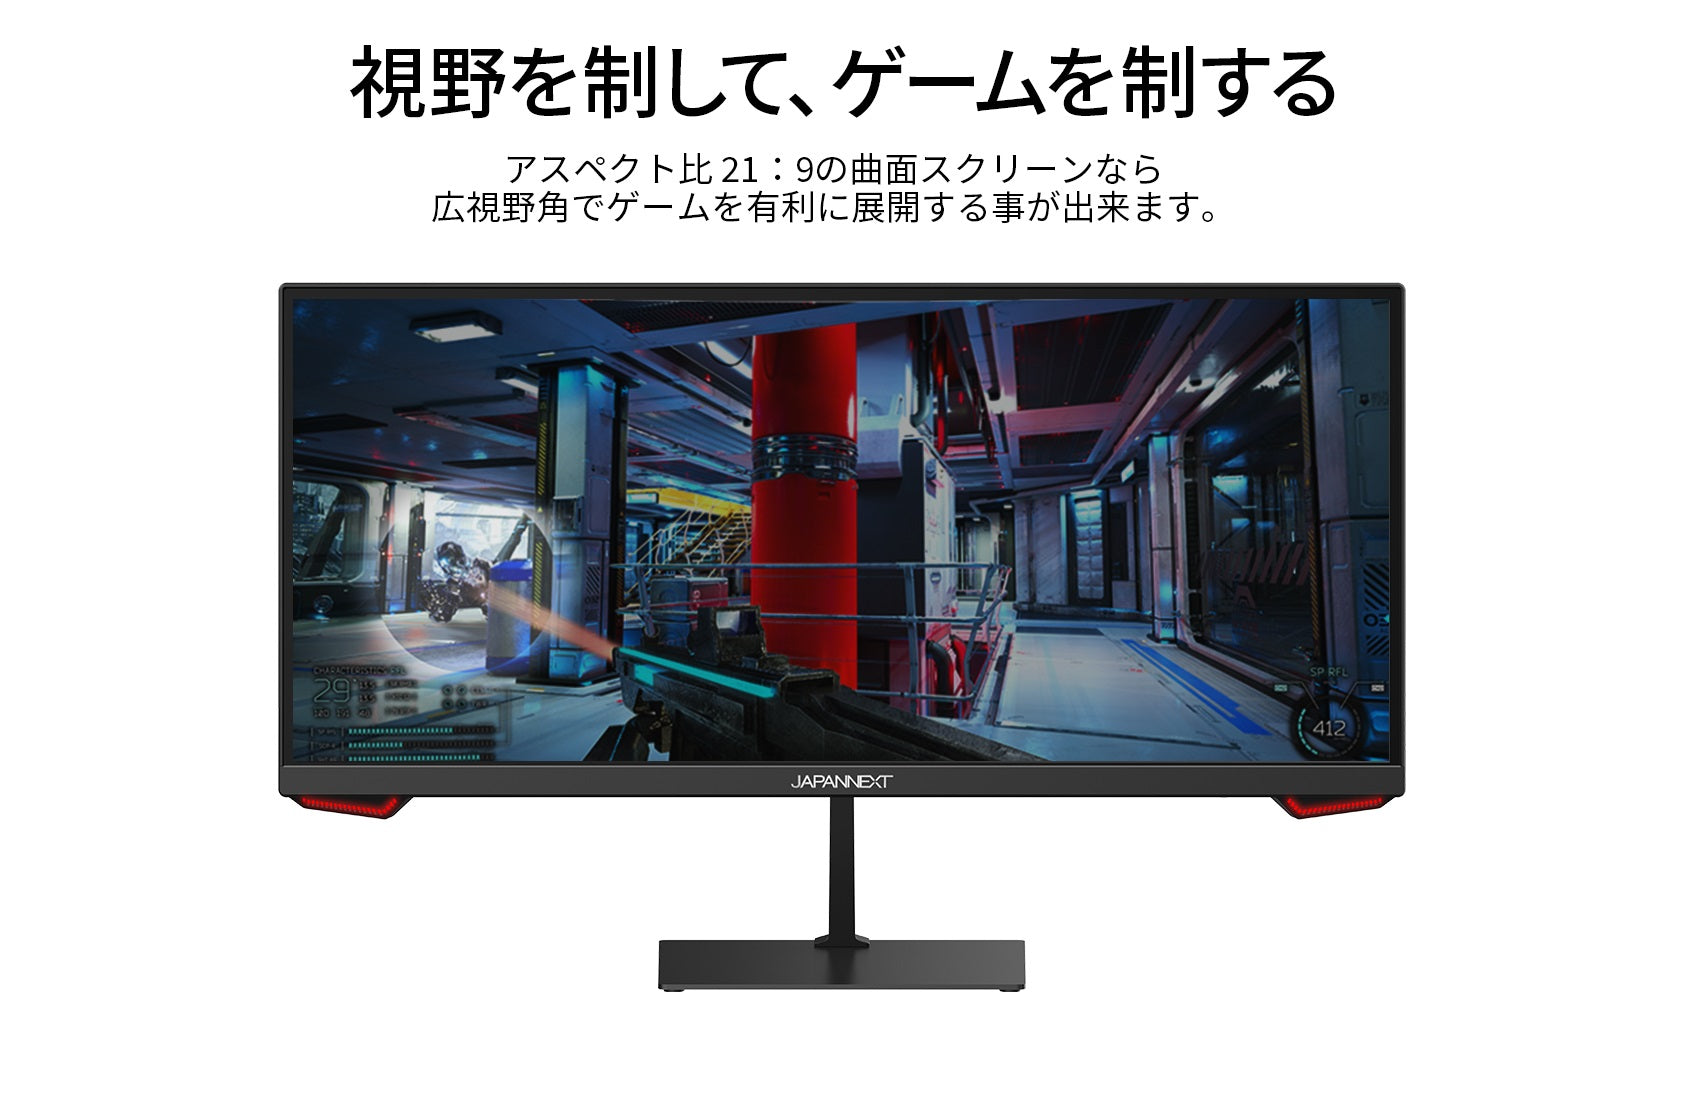 JAPANNEXT 23.3インチ ワイドFHD2560 x 1080 液晶モニ